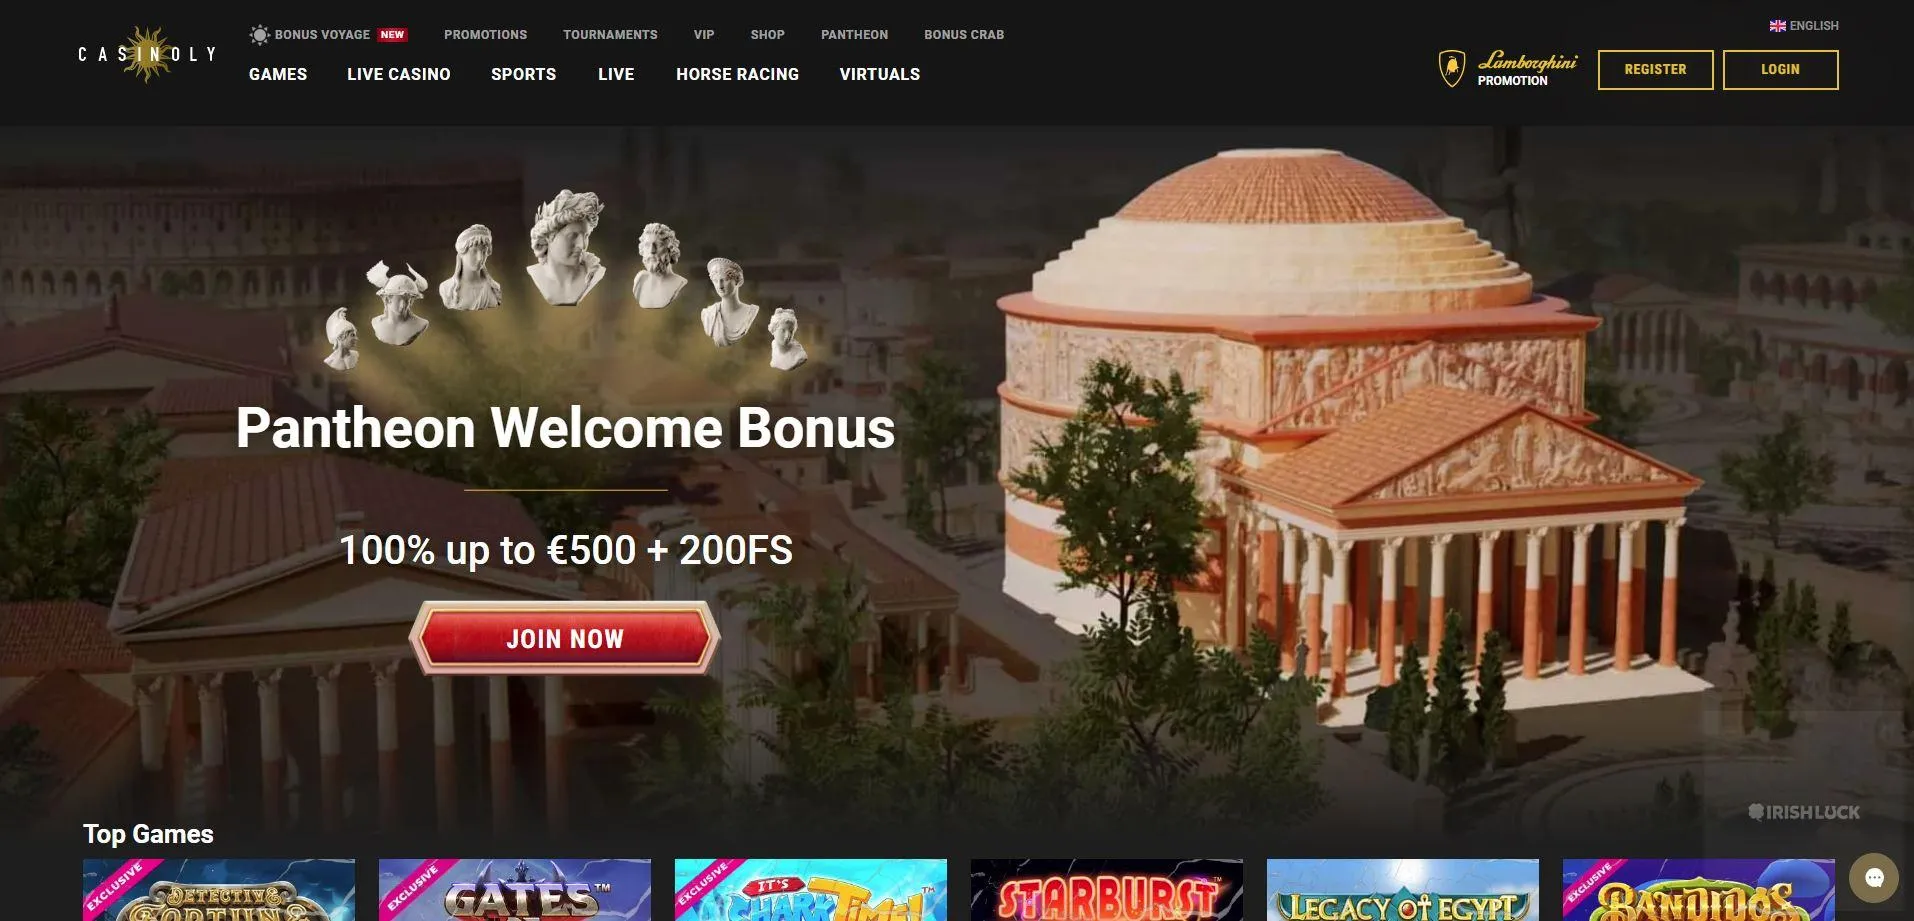 casinoly casino homepage welcome bonus online casinos in ireland rabidi n.v. online casinos ireland free spins welcome bonus